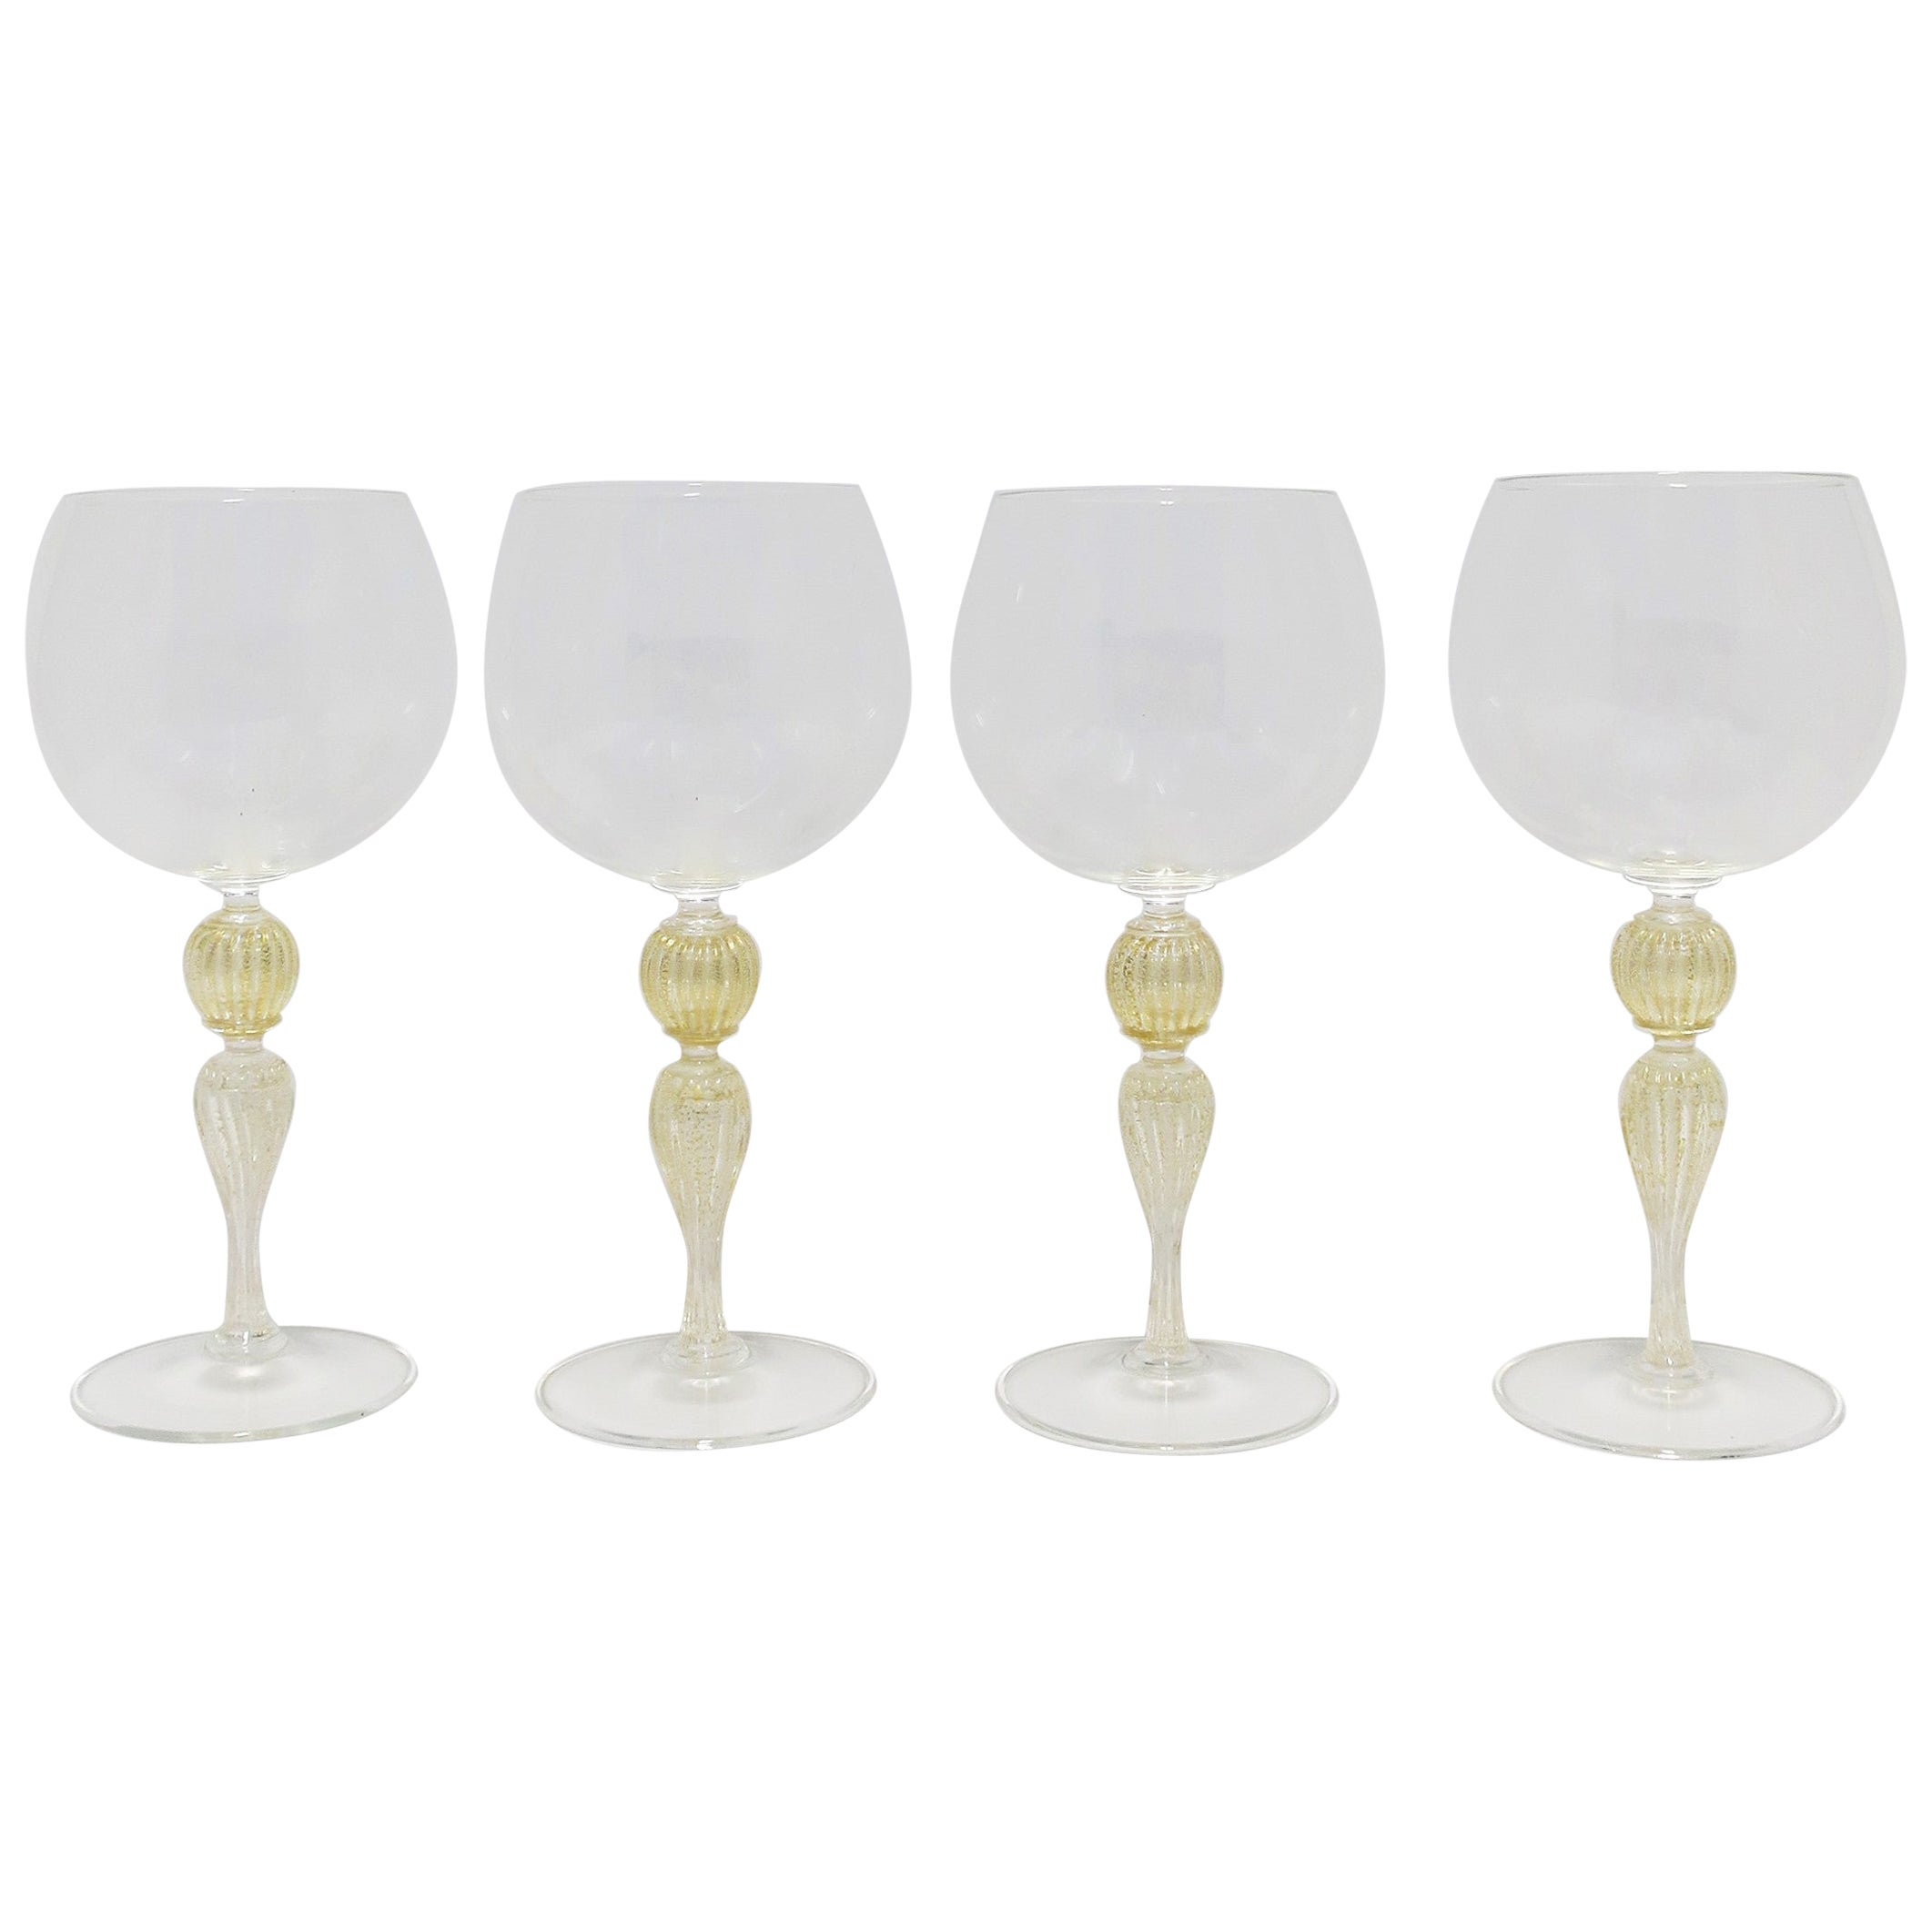 4 Black Glass Wine Goblets Chalice Thick Stem Set of 4